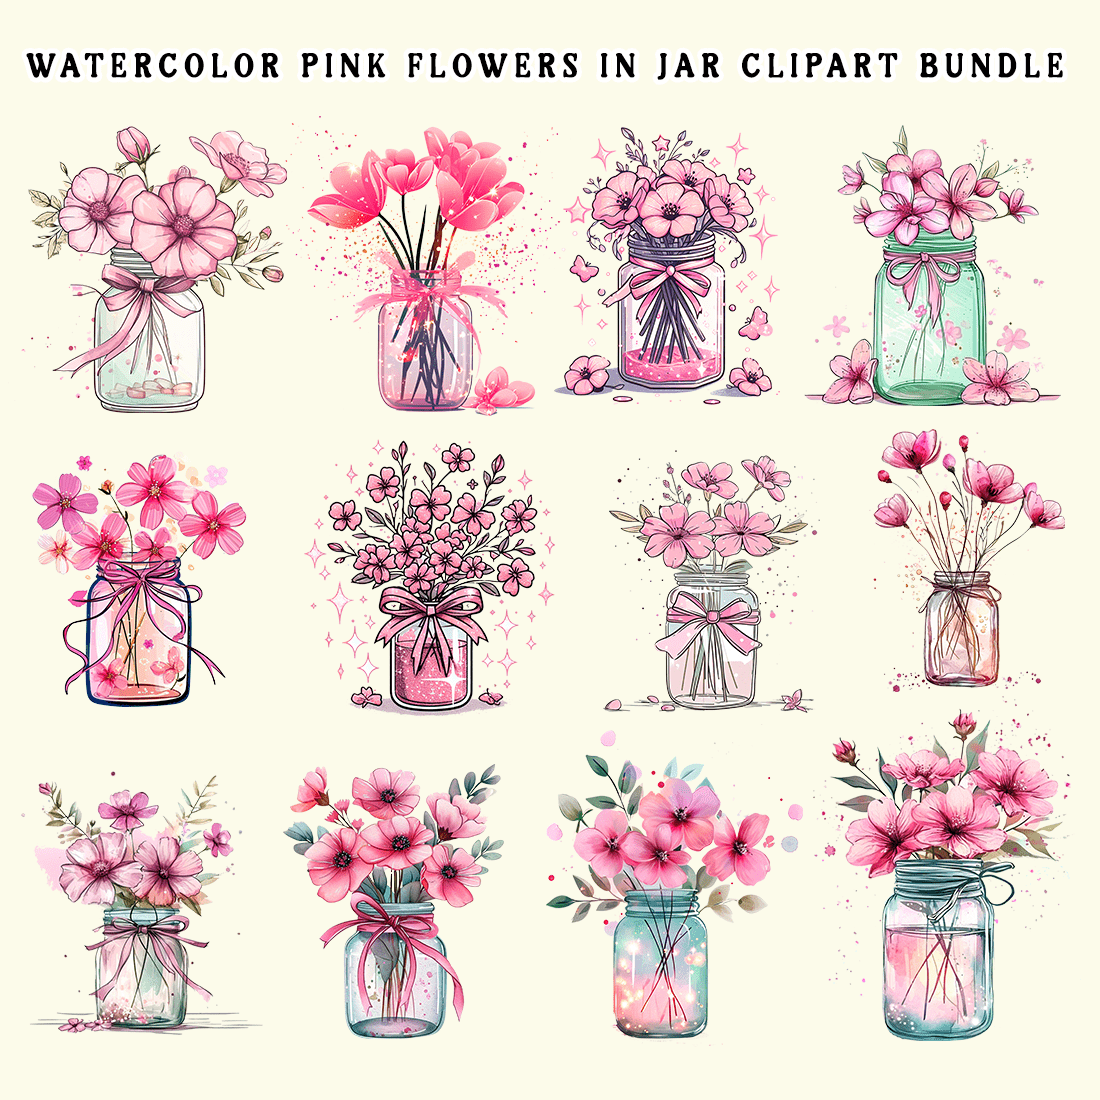 Watercolor Pink Flowers in Jar Clipart Bundle preview image.